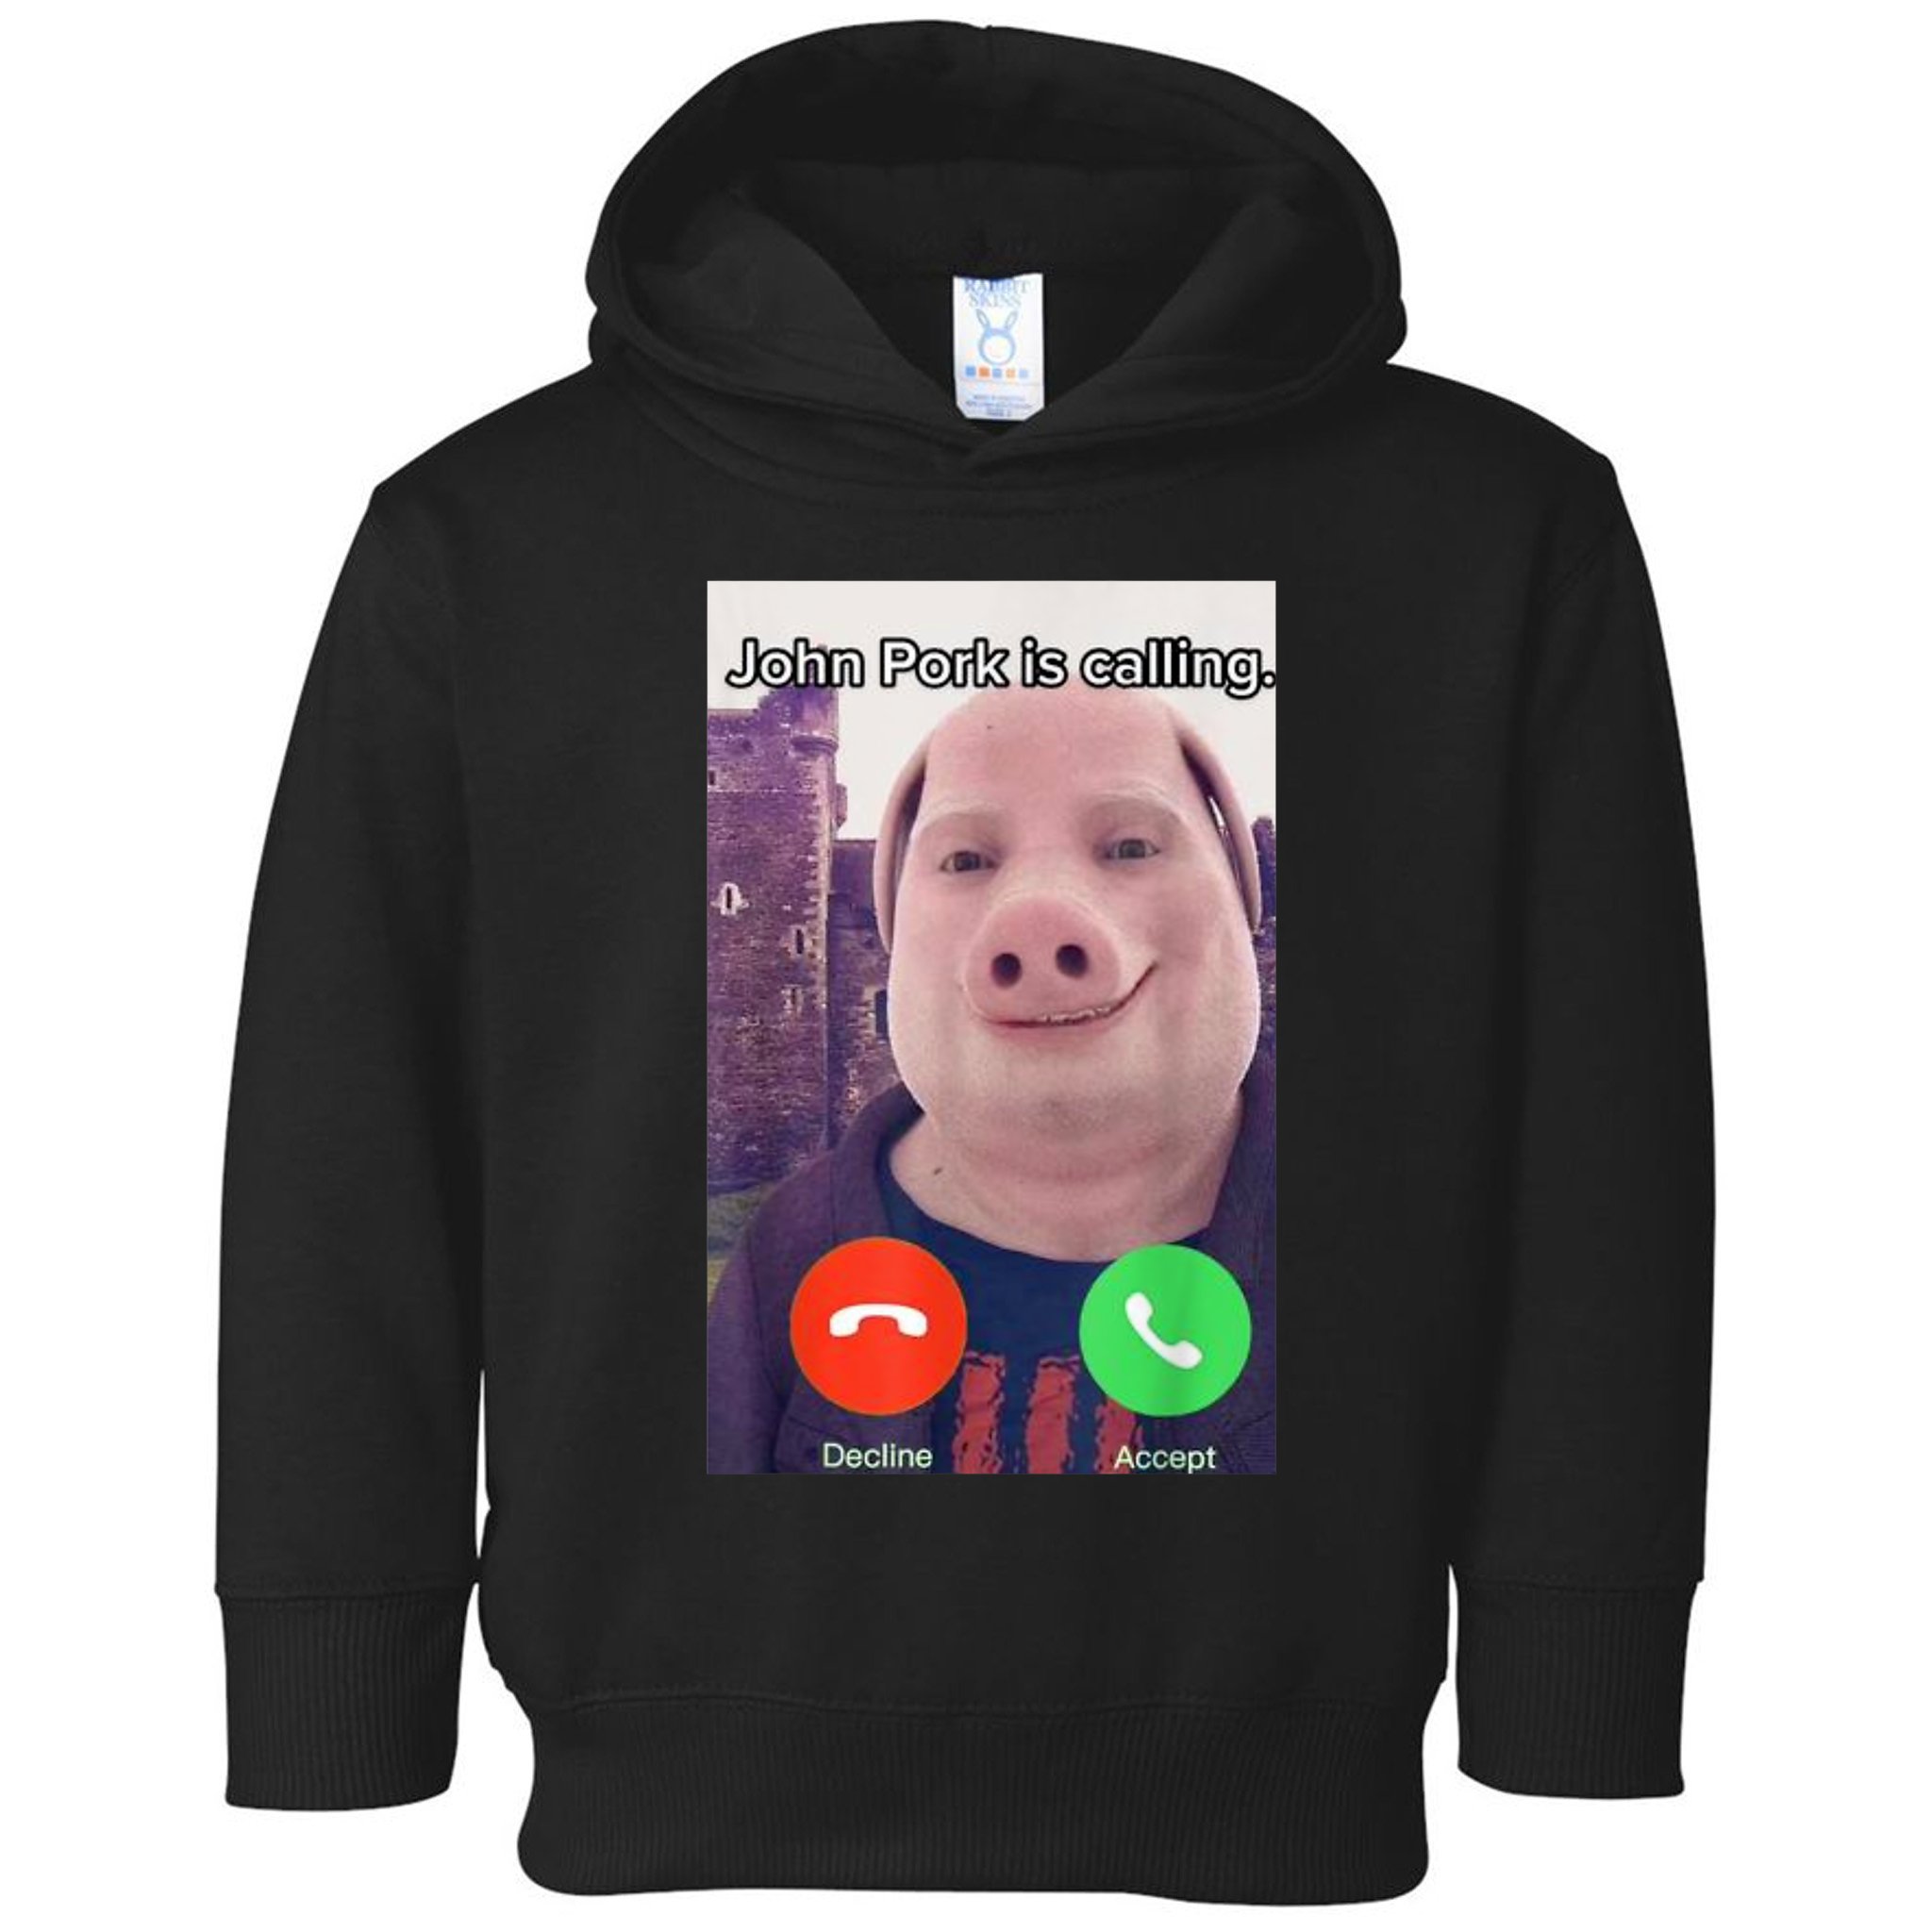 Official john pork is calling decline or accept shirt, hoodie